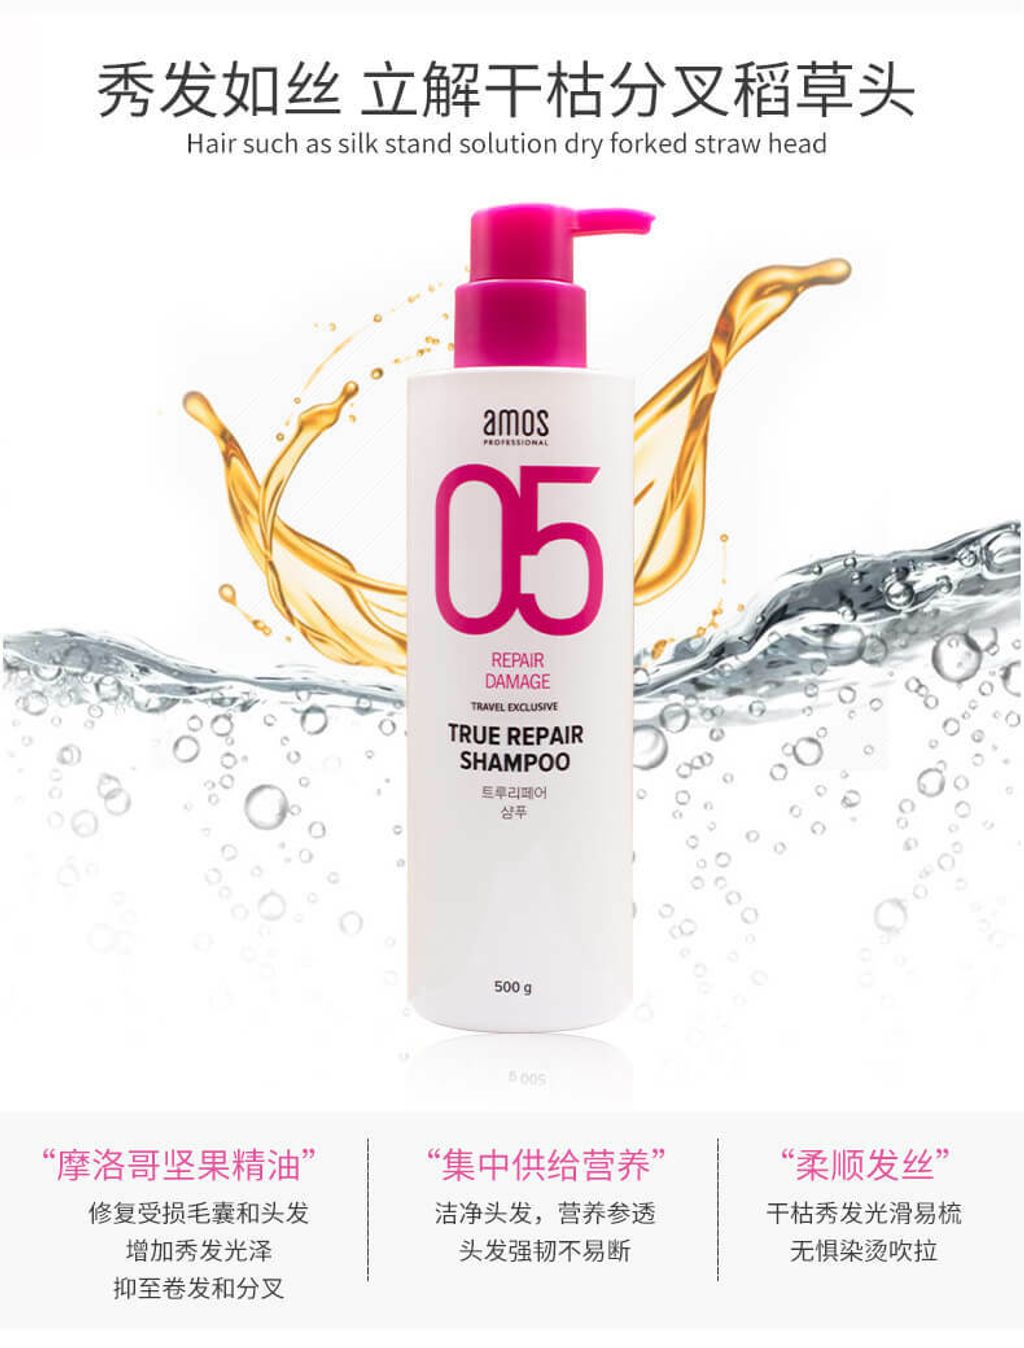 JuzBeauty_JuzBeautyMalaysia_JuzPretty_Authentic_Kbeauty_Malaysia_Skin_Care_Cosmetics_Jbeauty_Australia_Health_Care_Amos_05_True_Repair_Shampoo_ (10).jpg